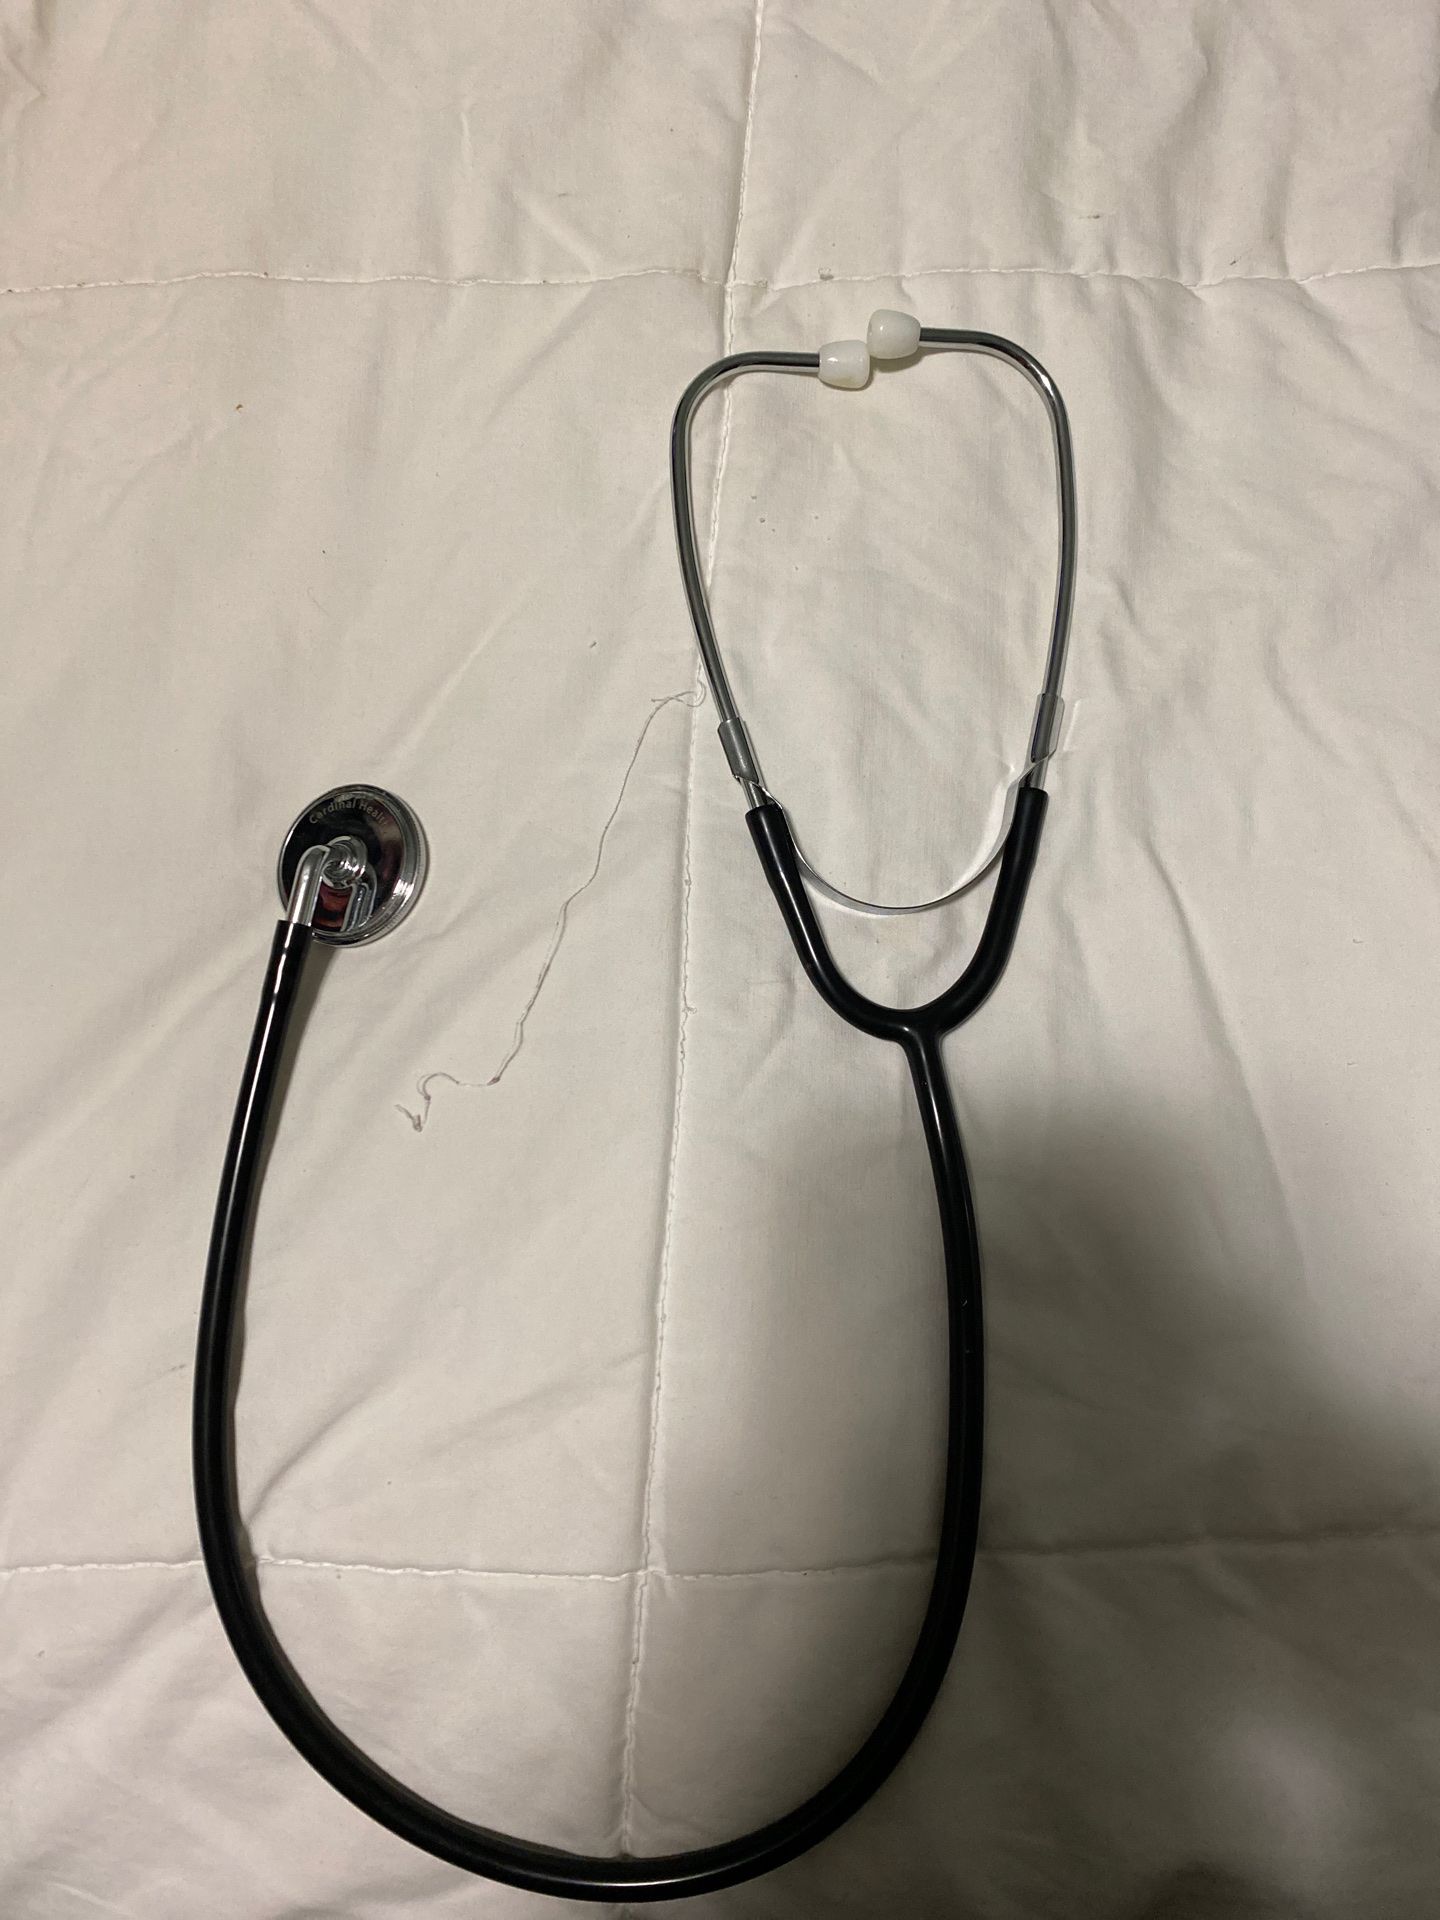 Cardinal Health stethoscope